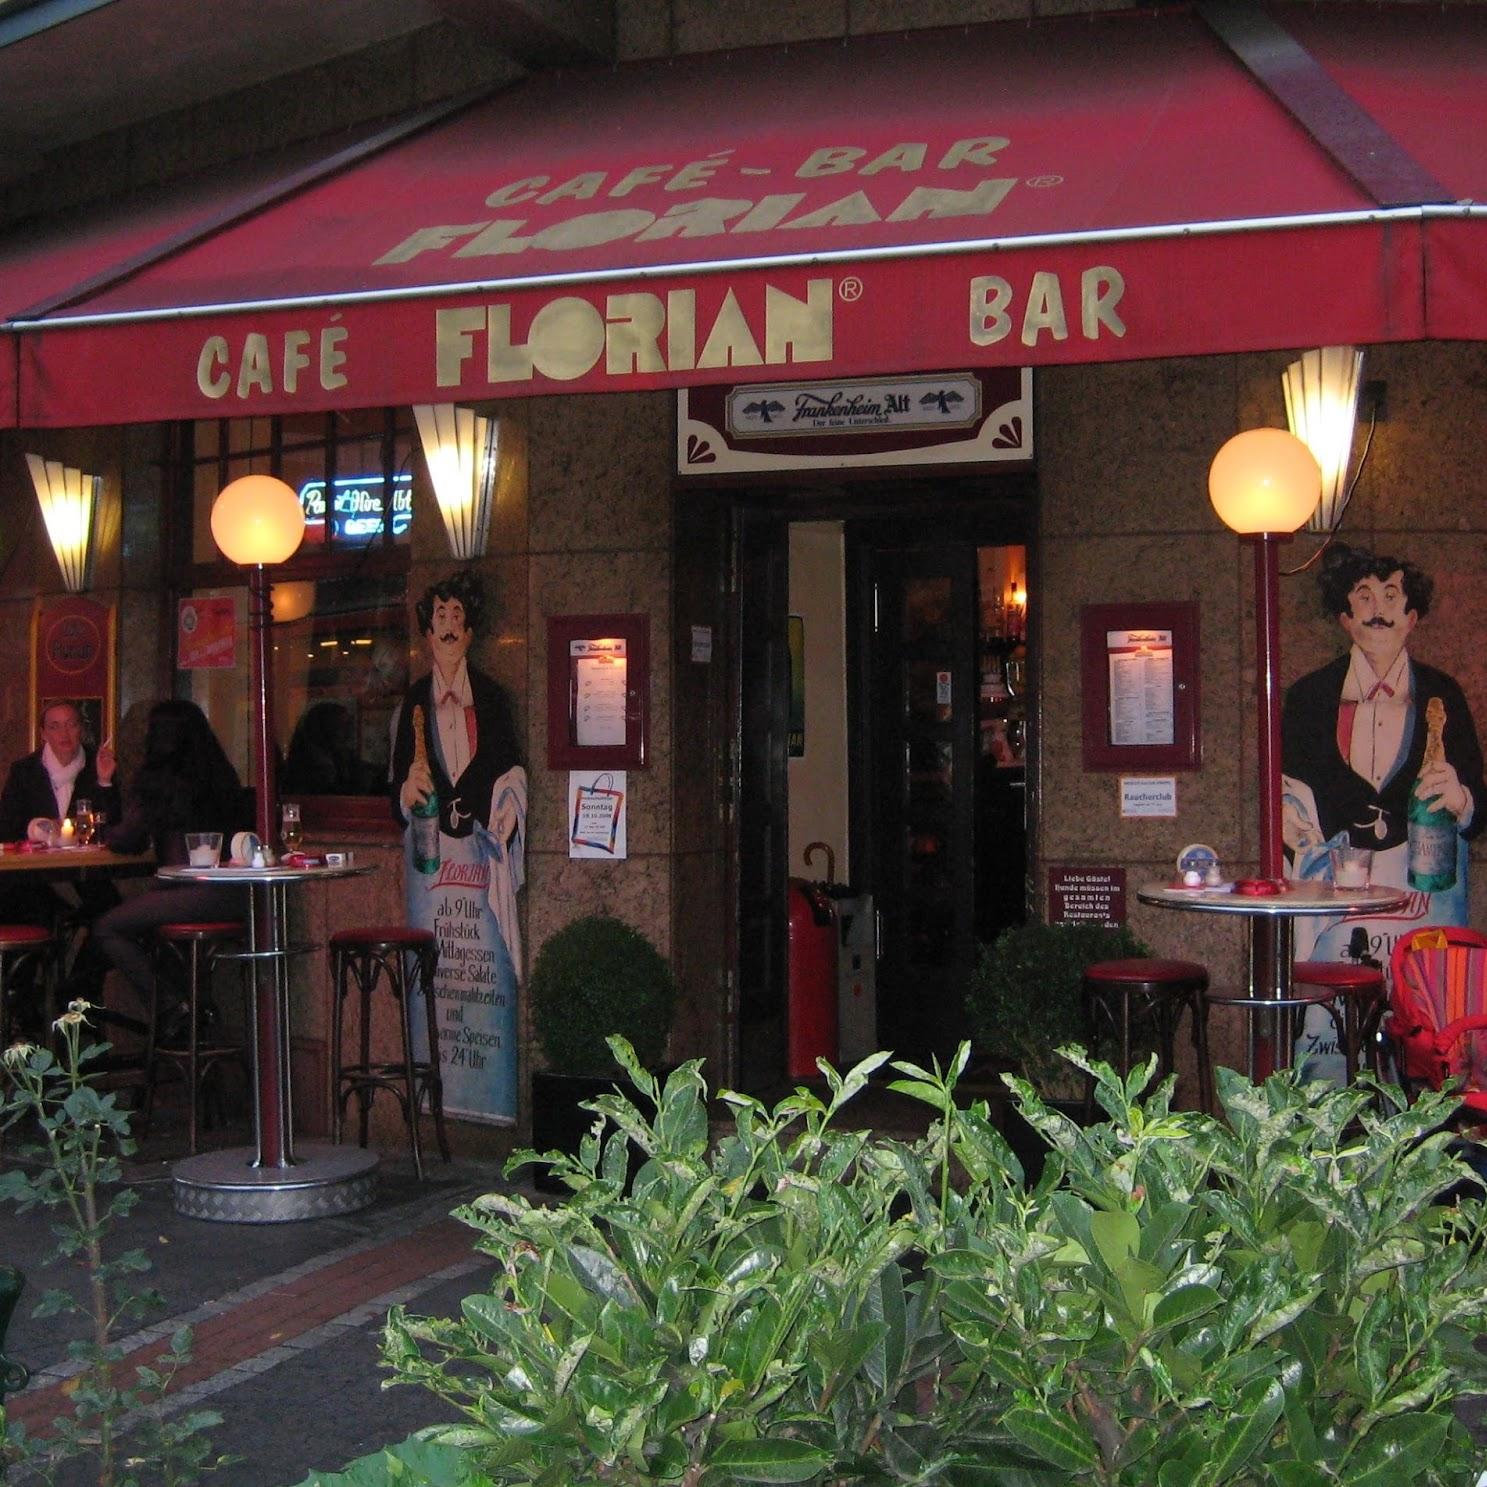 Restaurant "Café Florian" in Düsseldorf